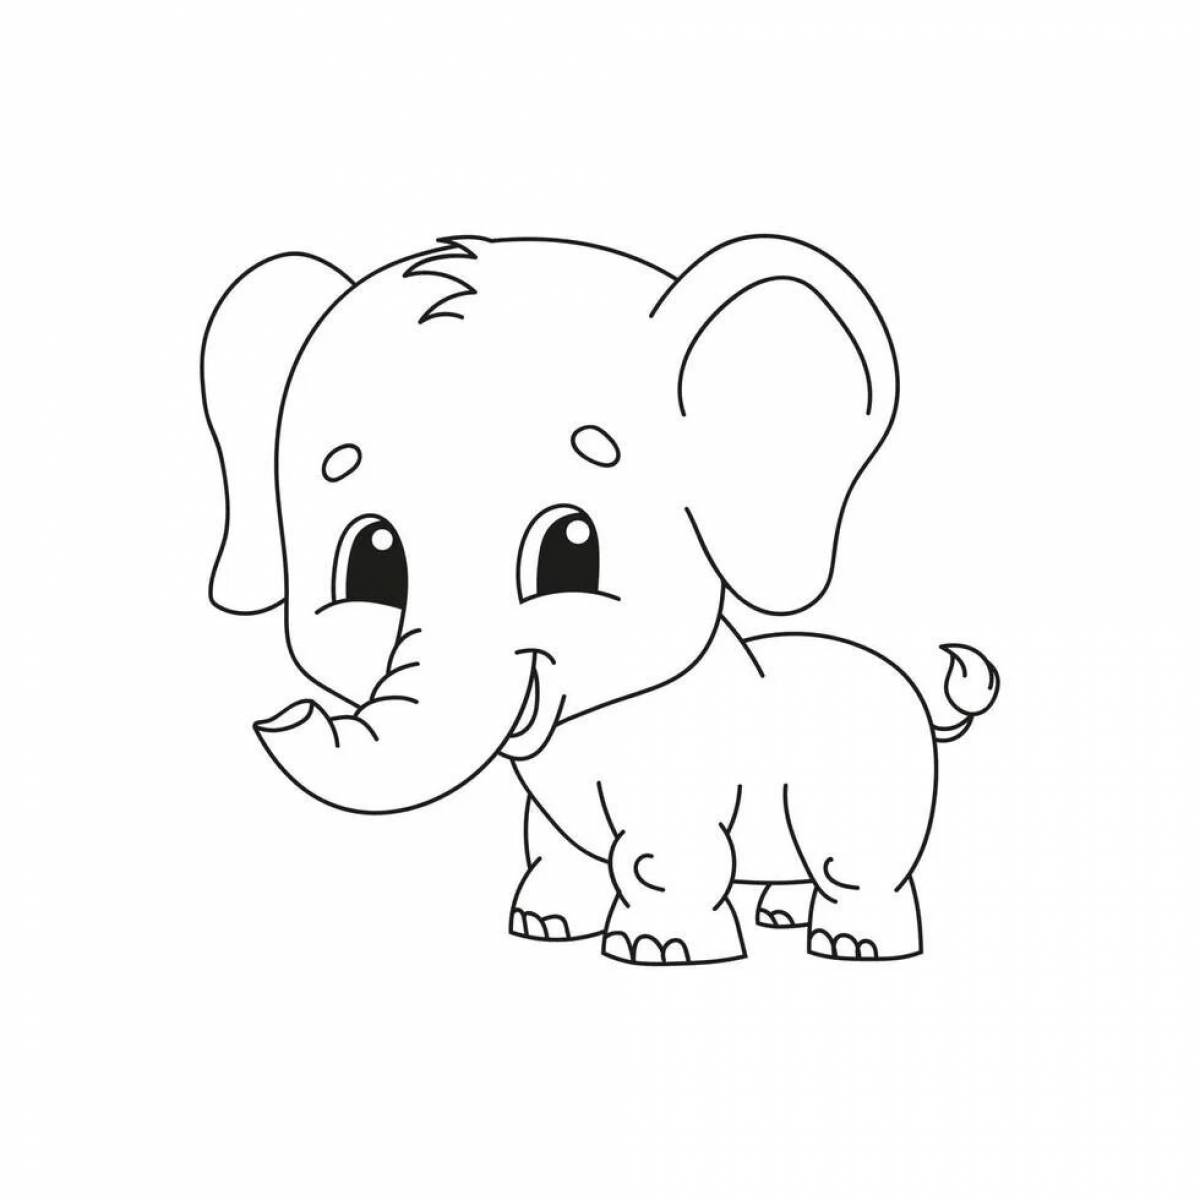 Creative elephant coloring